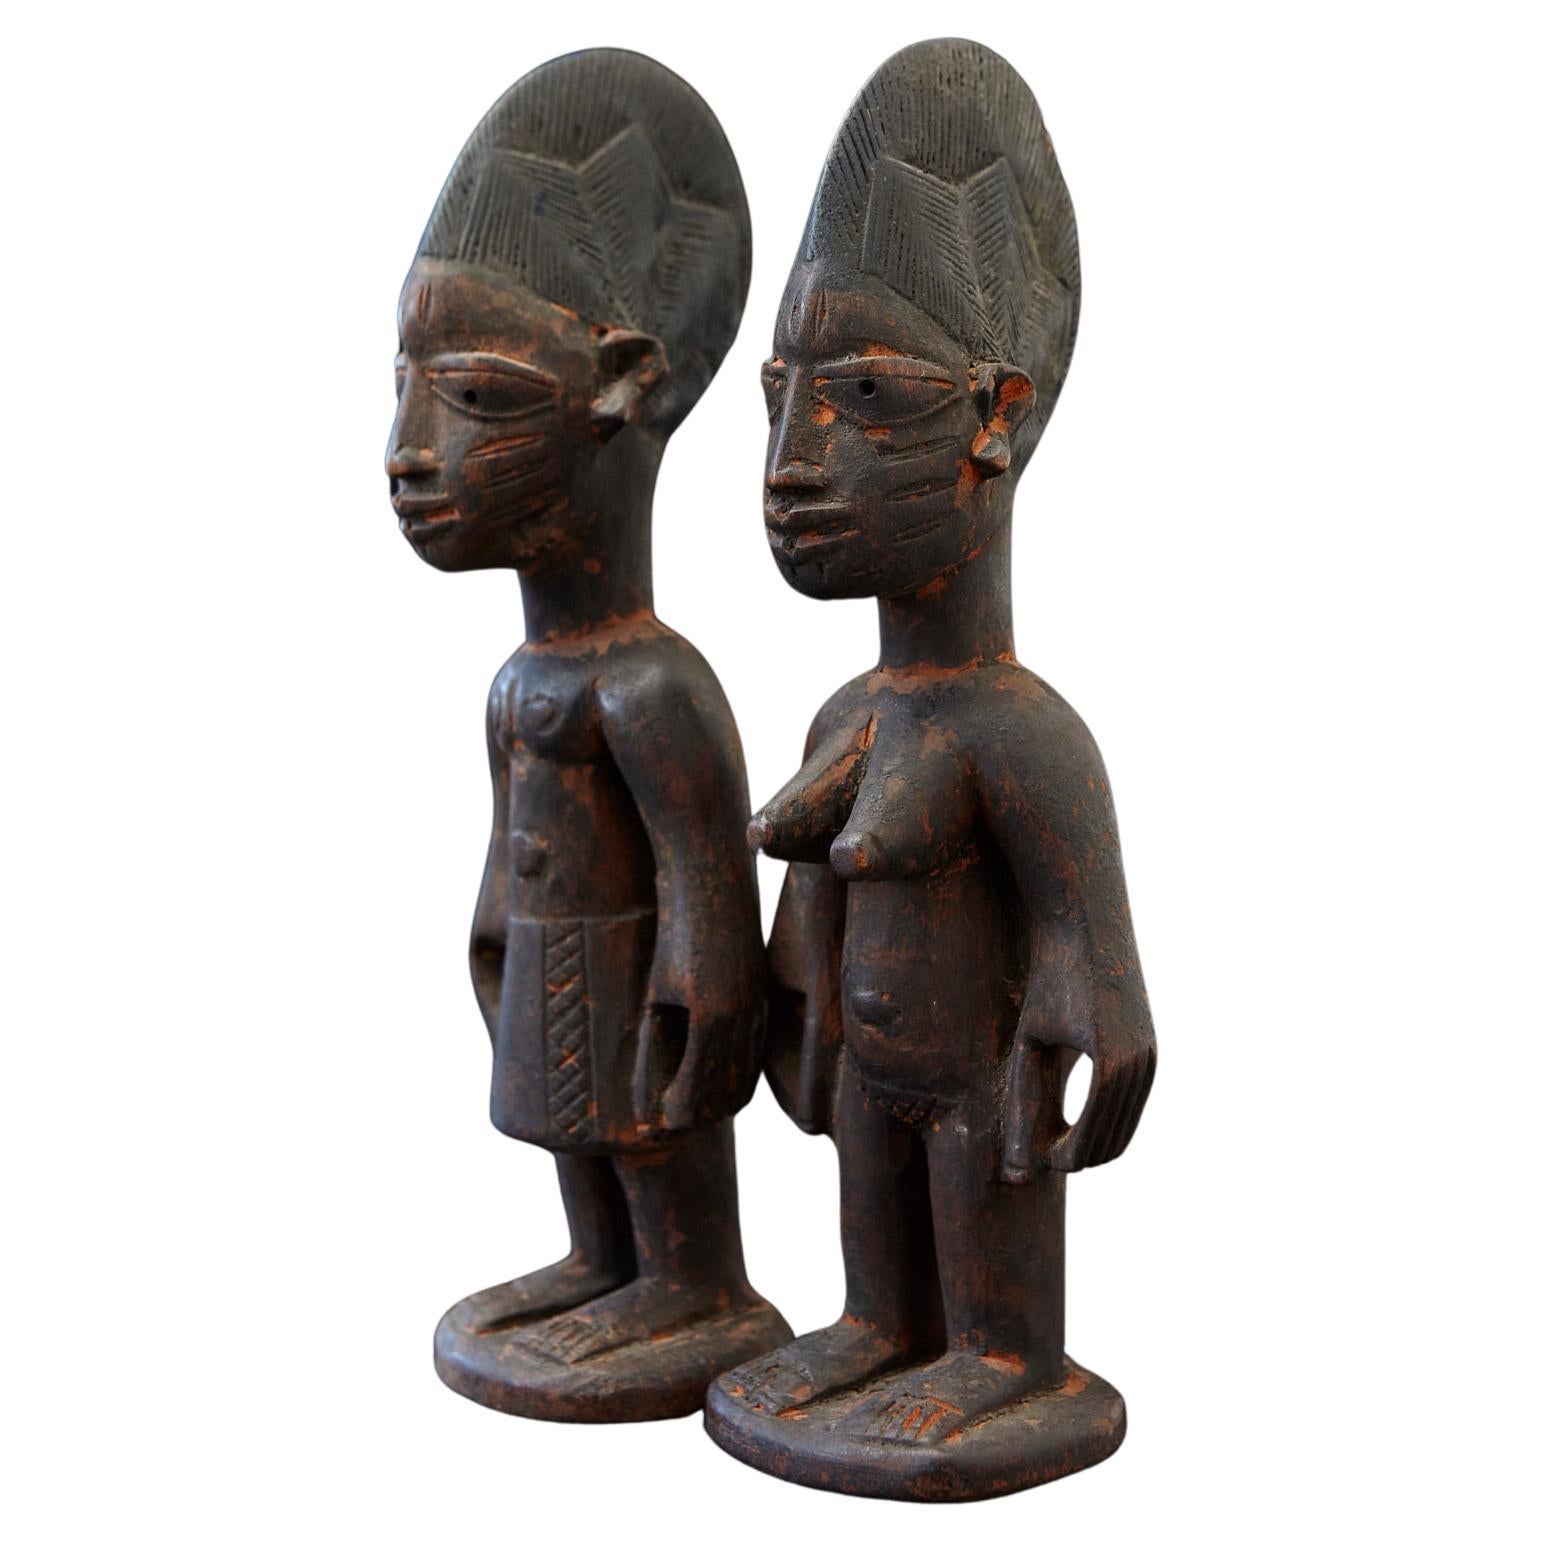 Ere Ibeji Pair of Commemorative Figures, Ife, Yoruba People Nigeria early 20th C